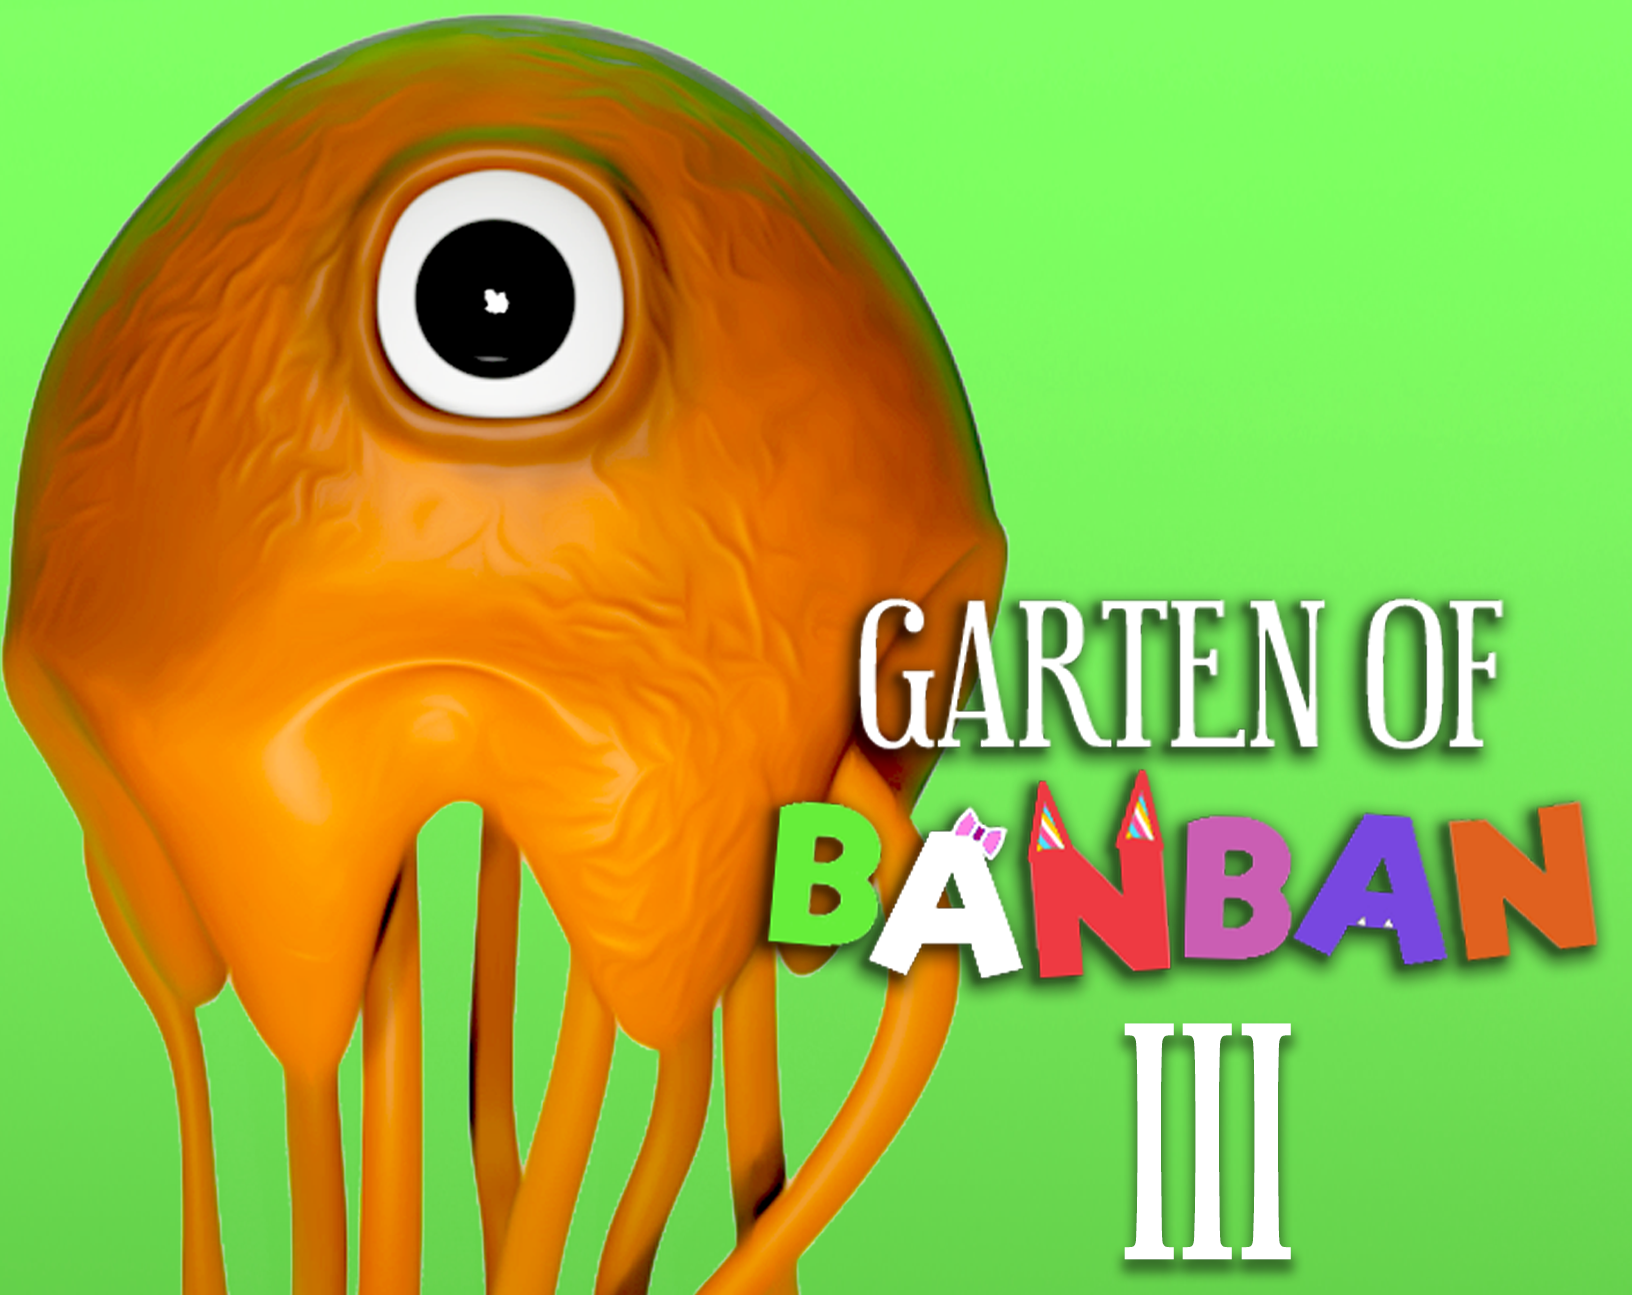 Garden Banban 3 APK (Android Game) - Free Download